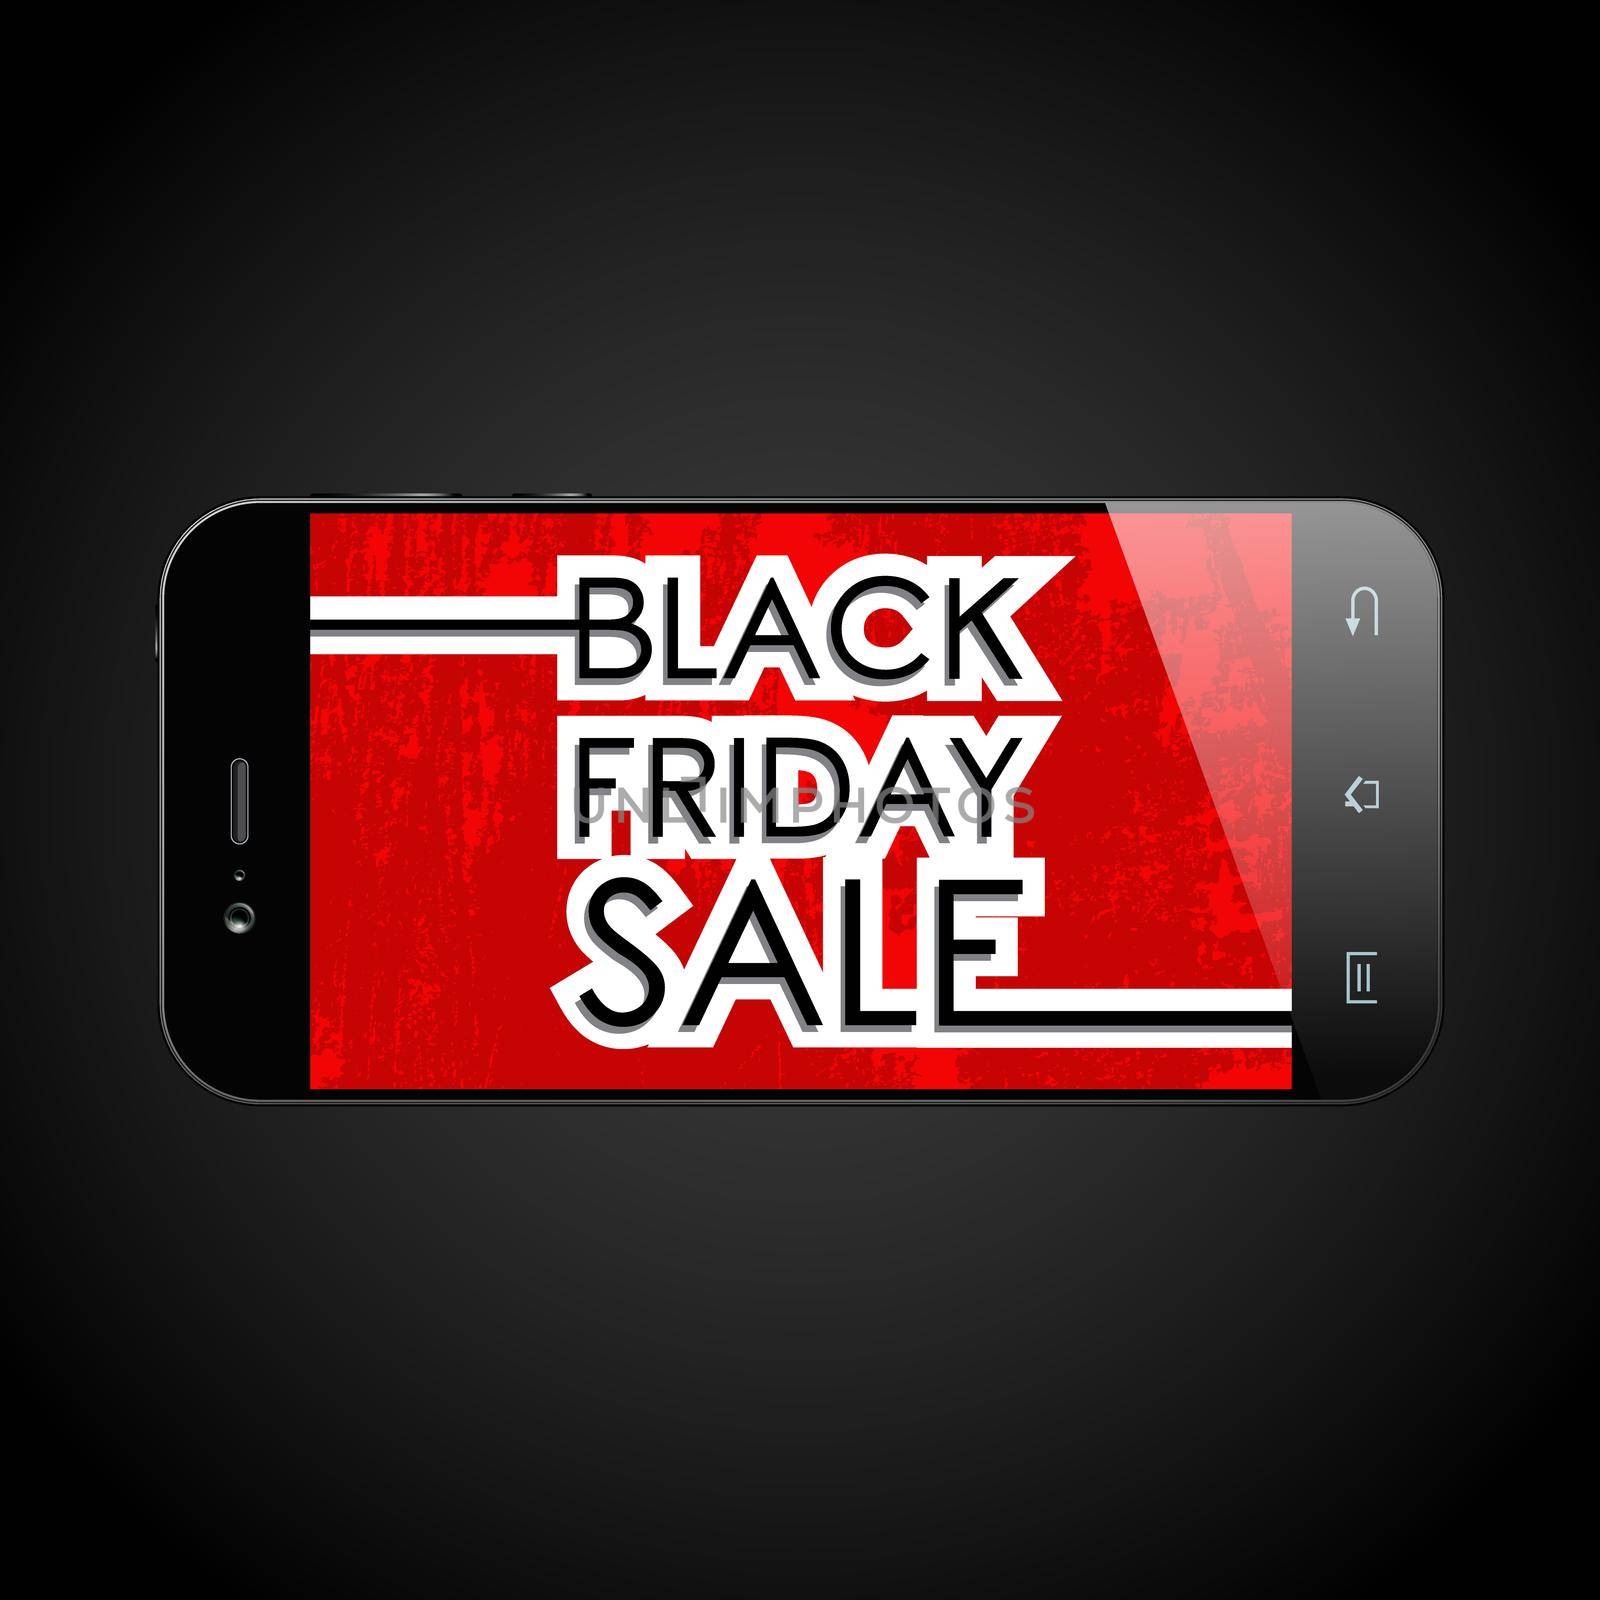 Black friday sale smartphone by Bobnevv